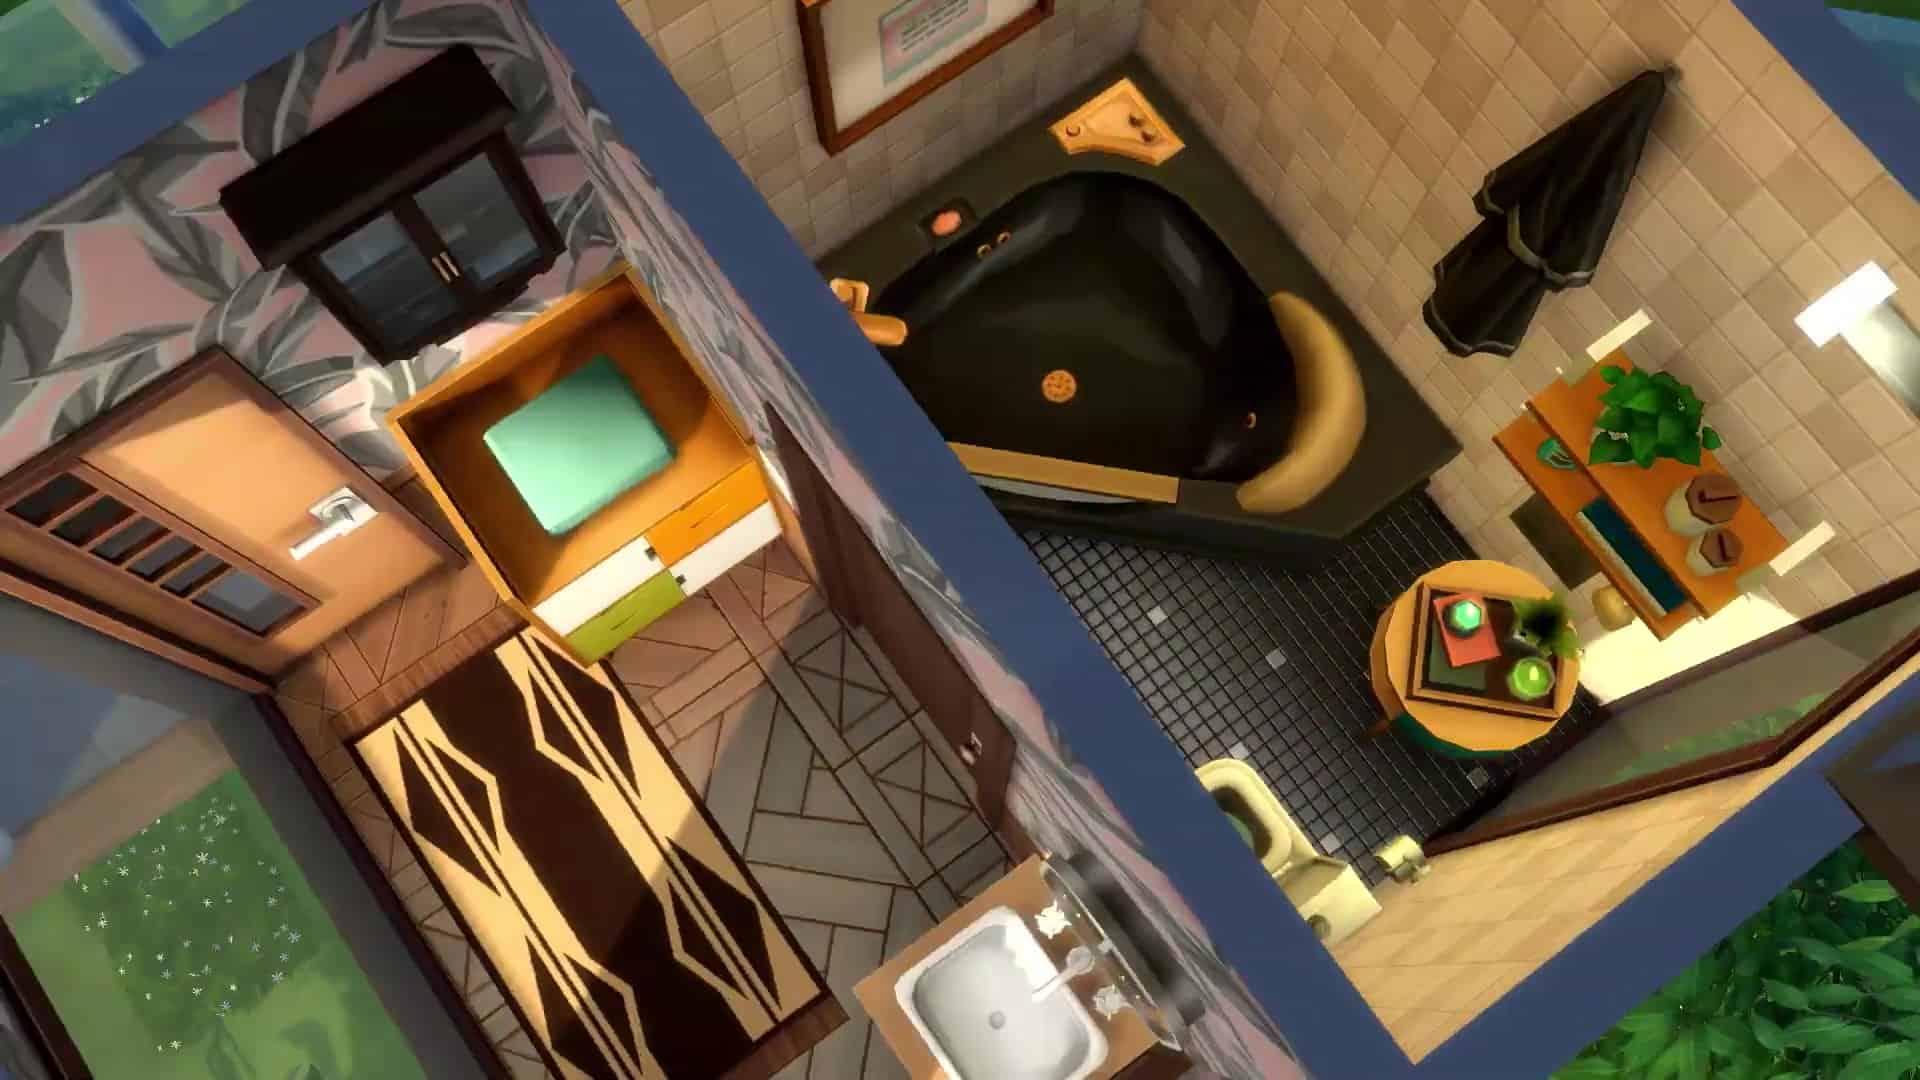 The Sims 4 Tiny Living Stuff Pack Screenshots 2020 (8)